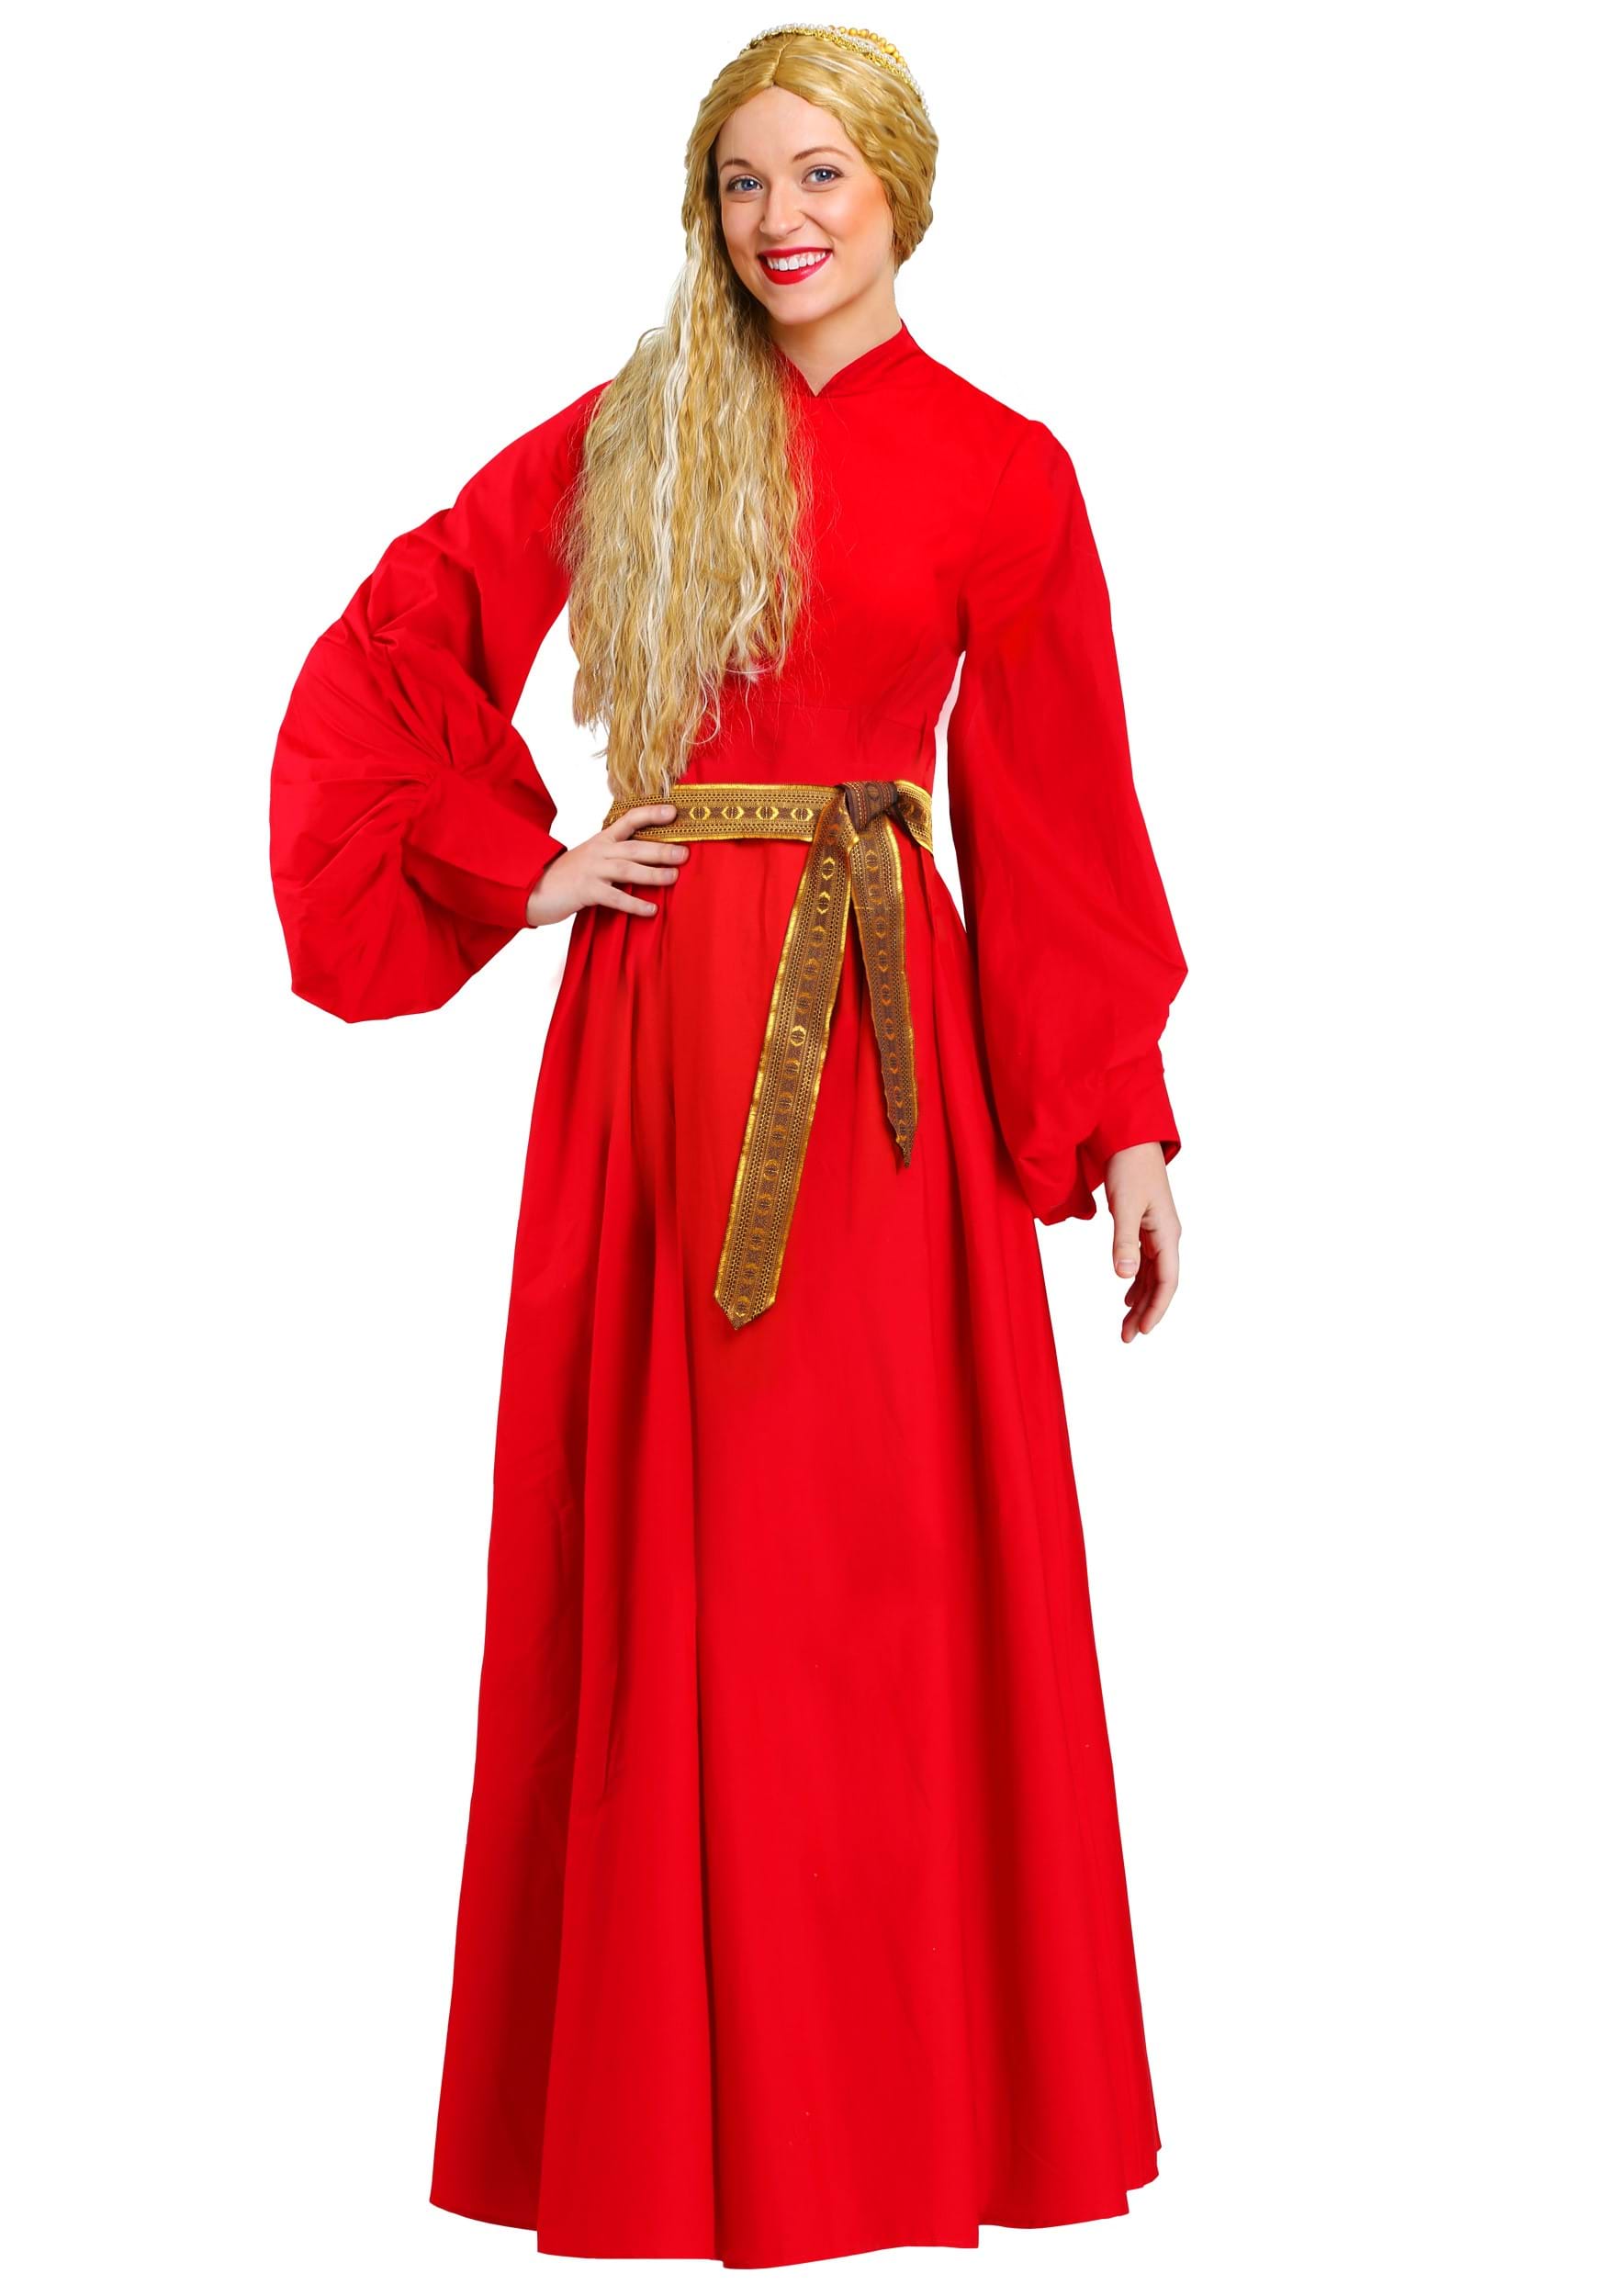 Photos - Fancy Dress Princess FUN Costumes  Bride Buttercup Red Dress Costume for Women Red FUN1 